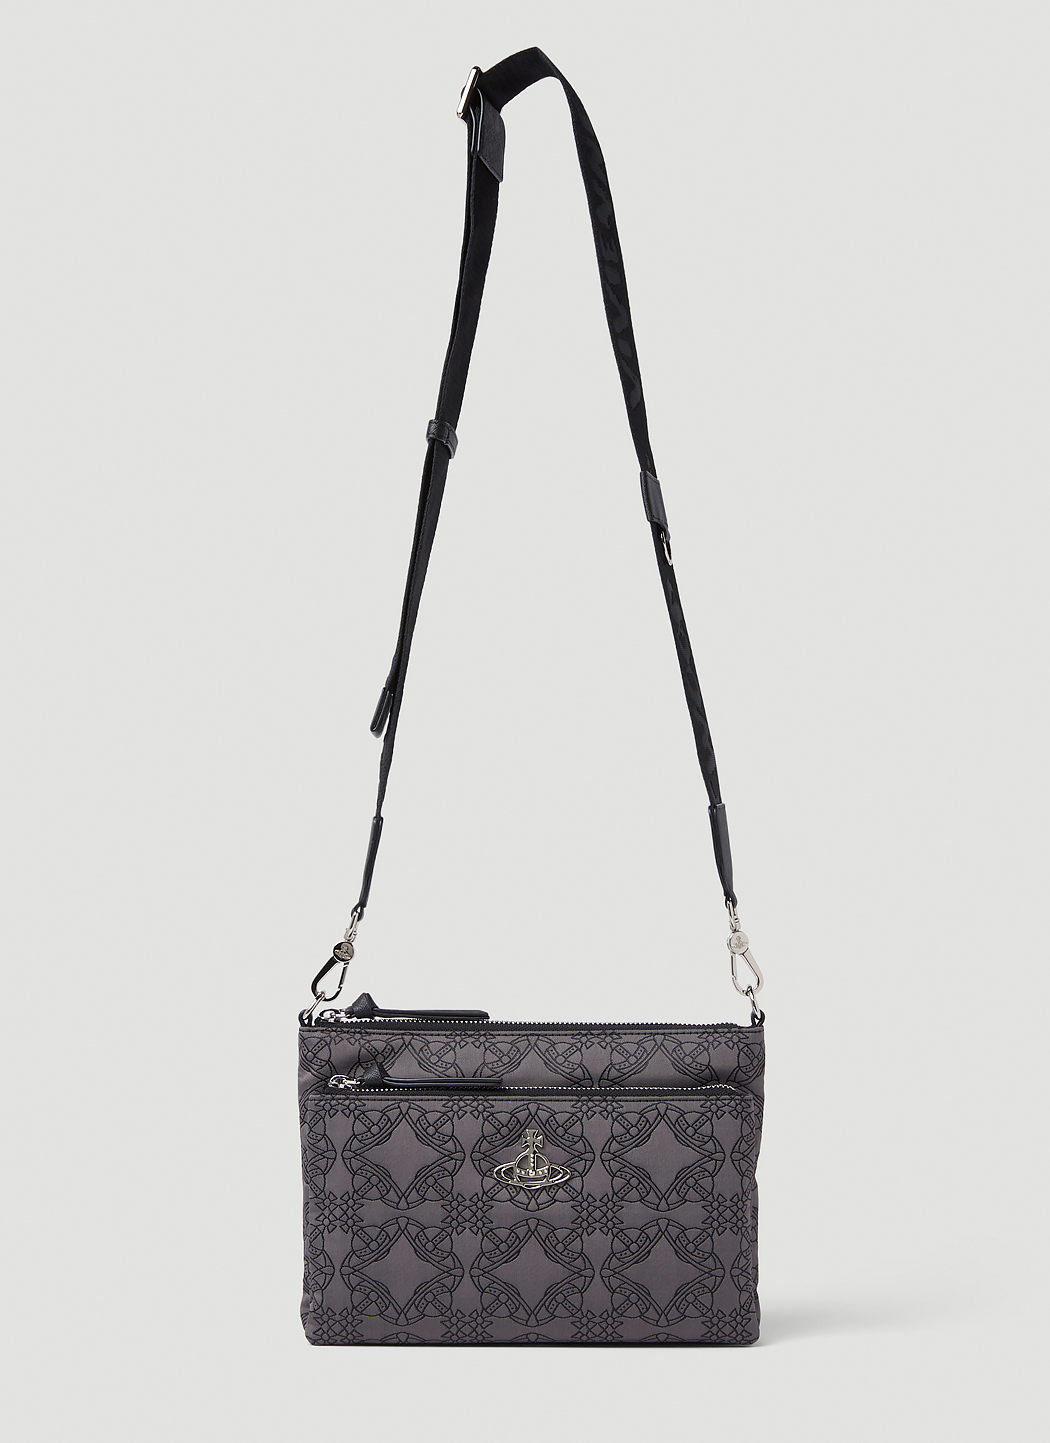 Louis Vuitton Soft Trunk Monogram Mini Bag for Sale in Charlotte